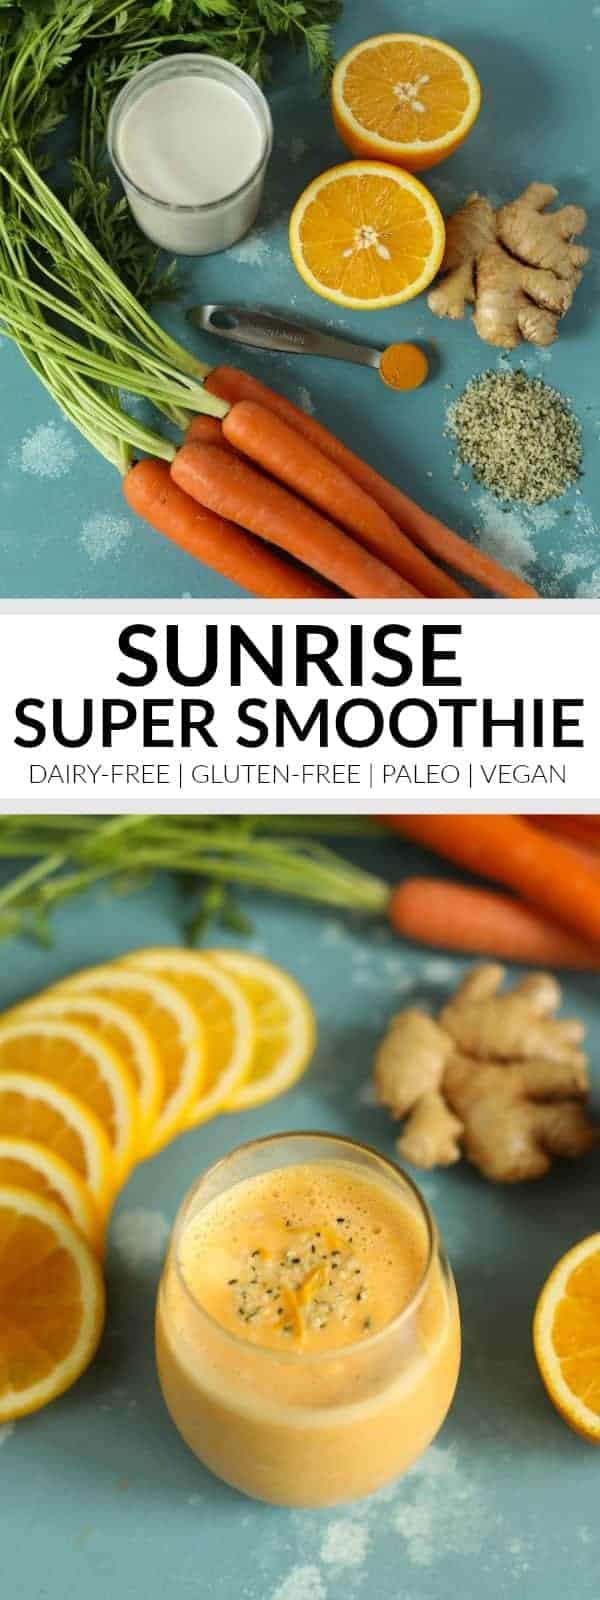 Pinterest image for Sunrise Super Smoothie 